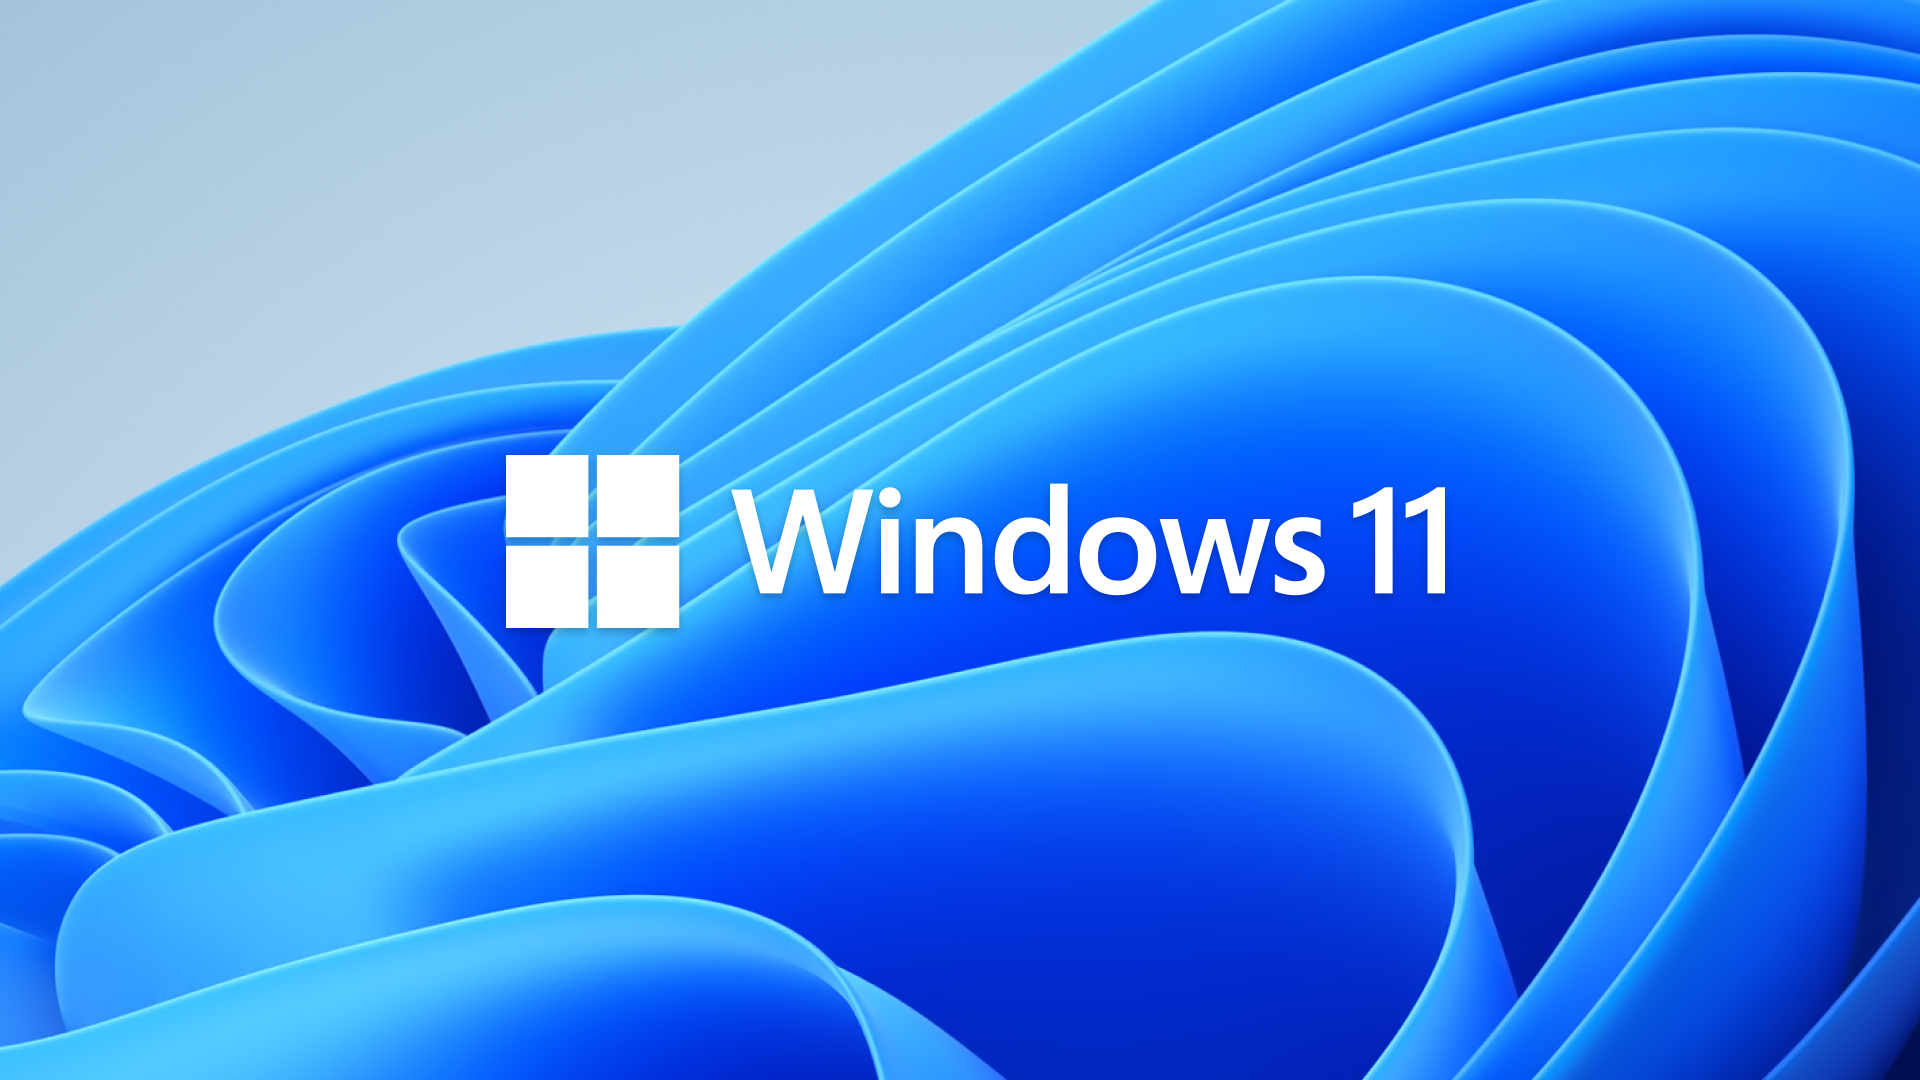 Windows 11 Launching October 5